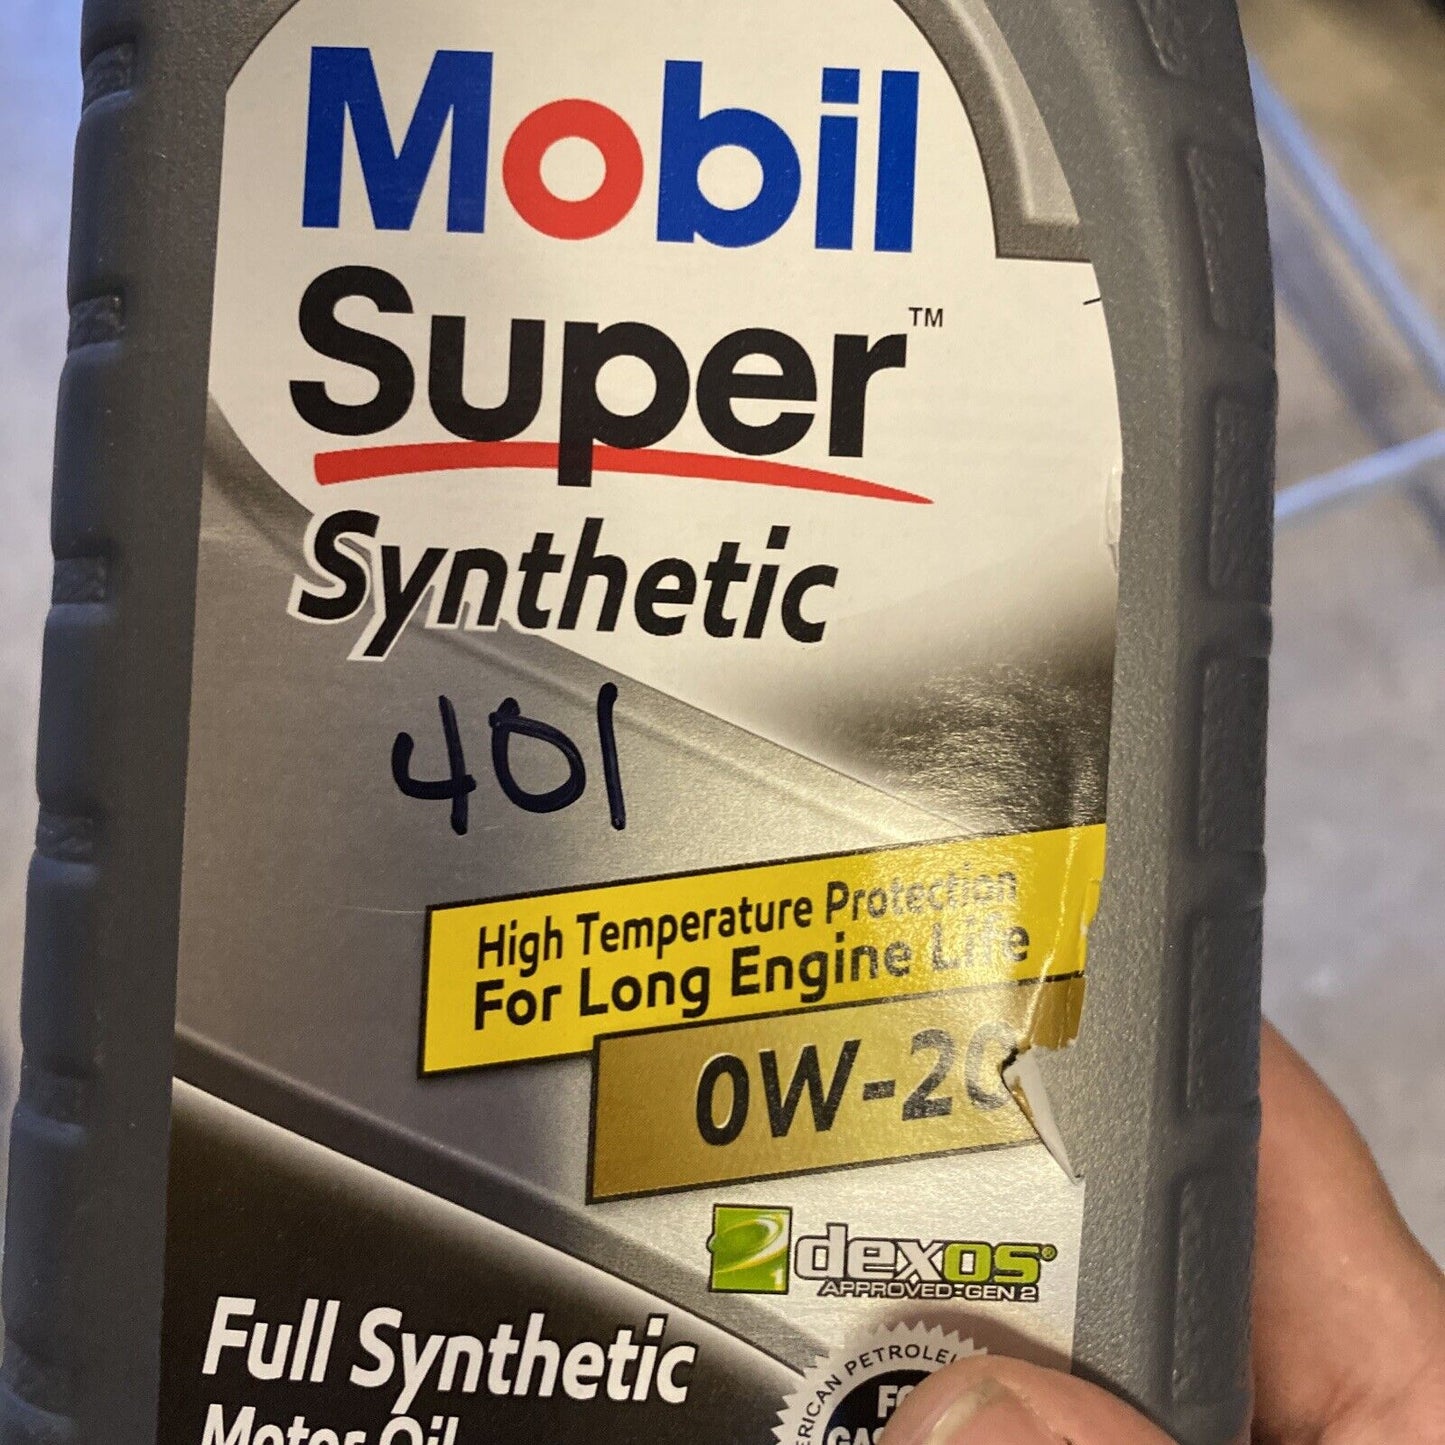 1-Quart Bottle of Mobil Super Synthetic 0W-20 Full Synthetic Motor Oil